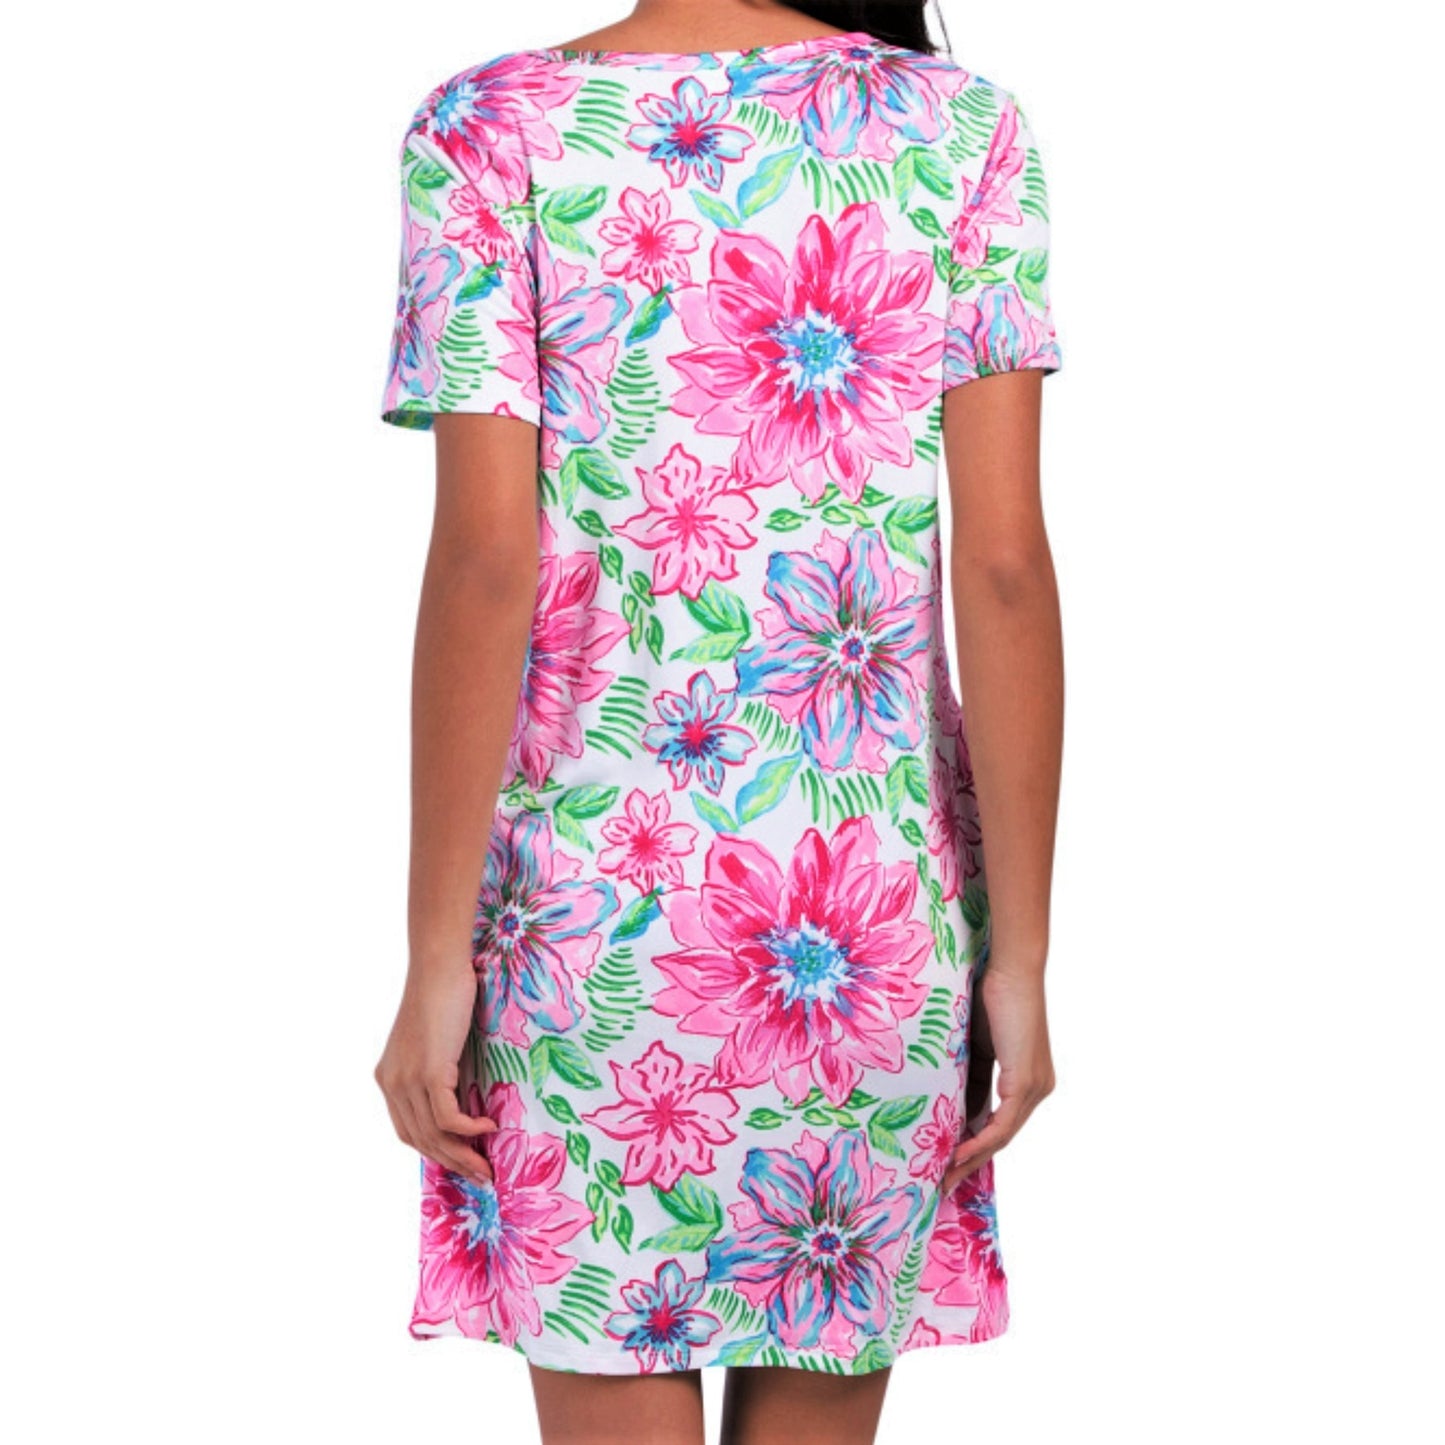 STELLA PARKER Upf 30+ Garden Floral Dress Cover-up